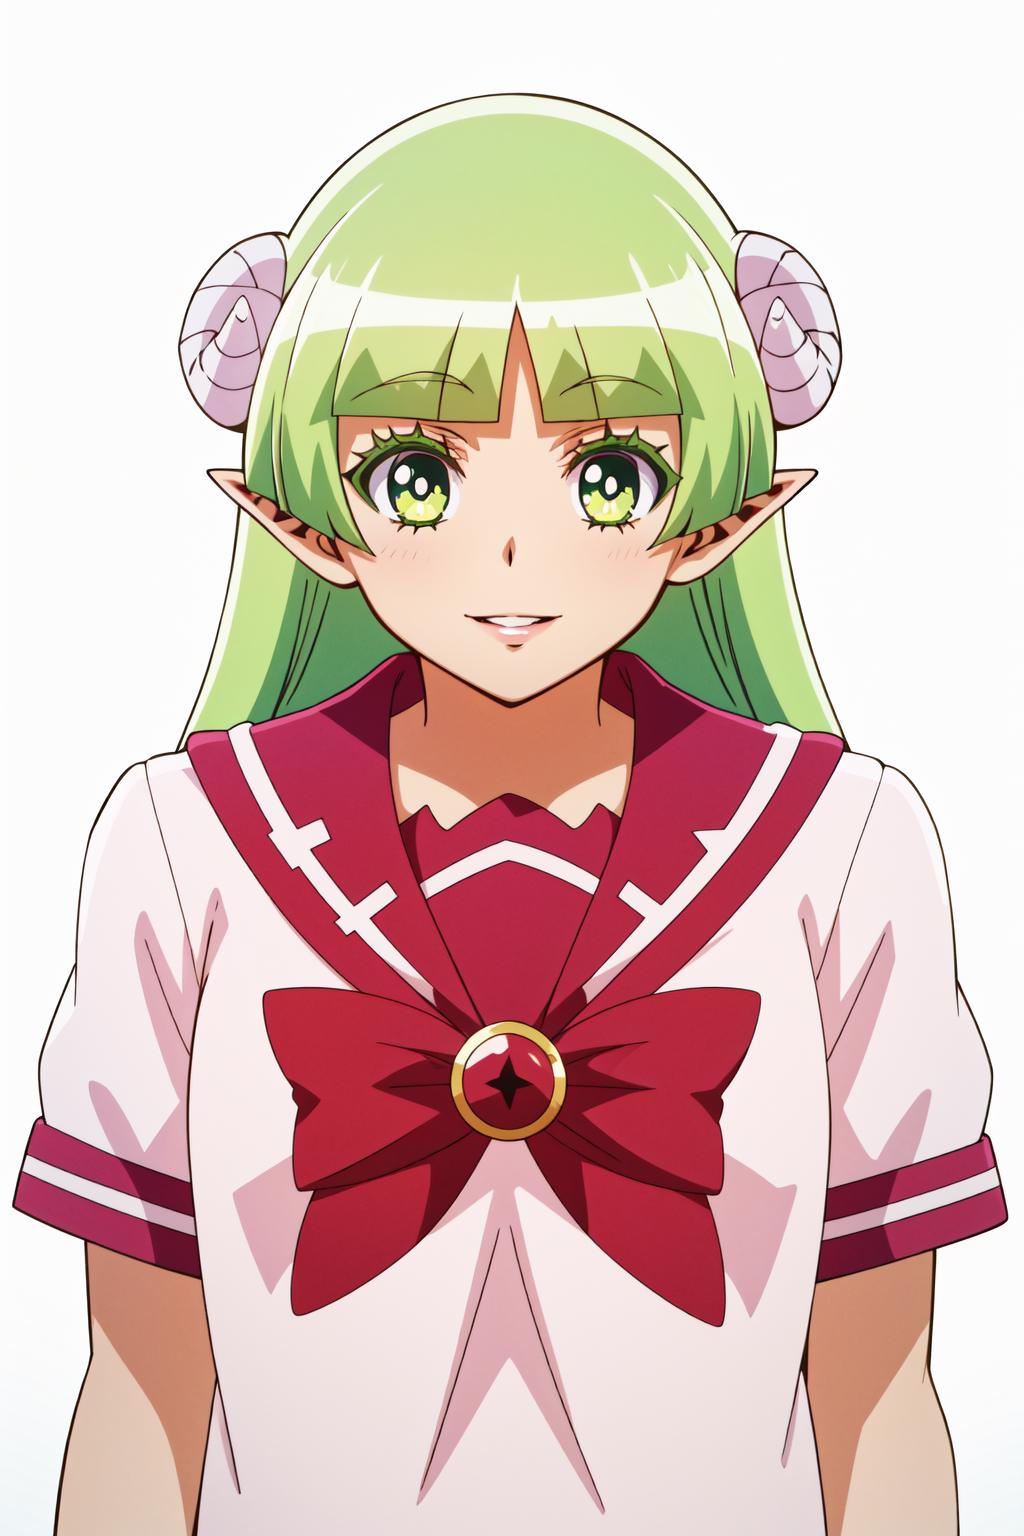 Blushing Clara [Welcome to Demon School! Iruma-kun] : r/headpats